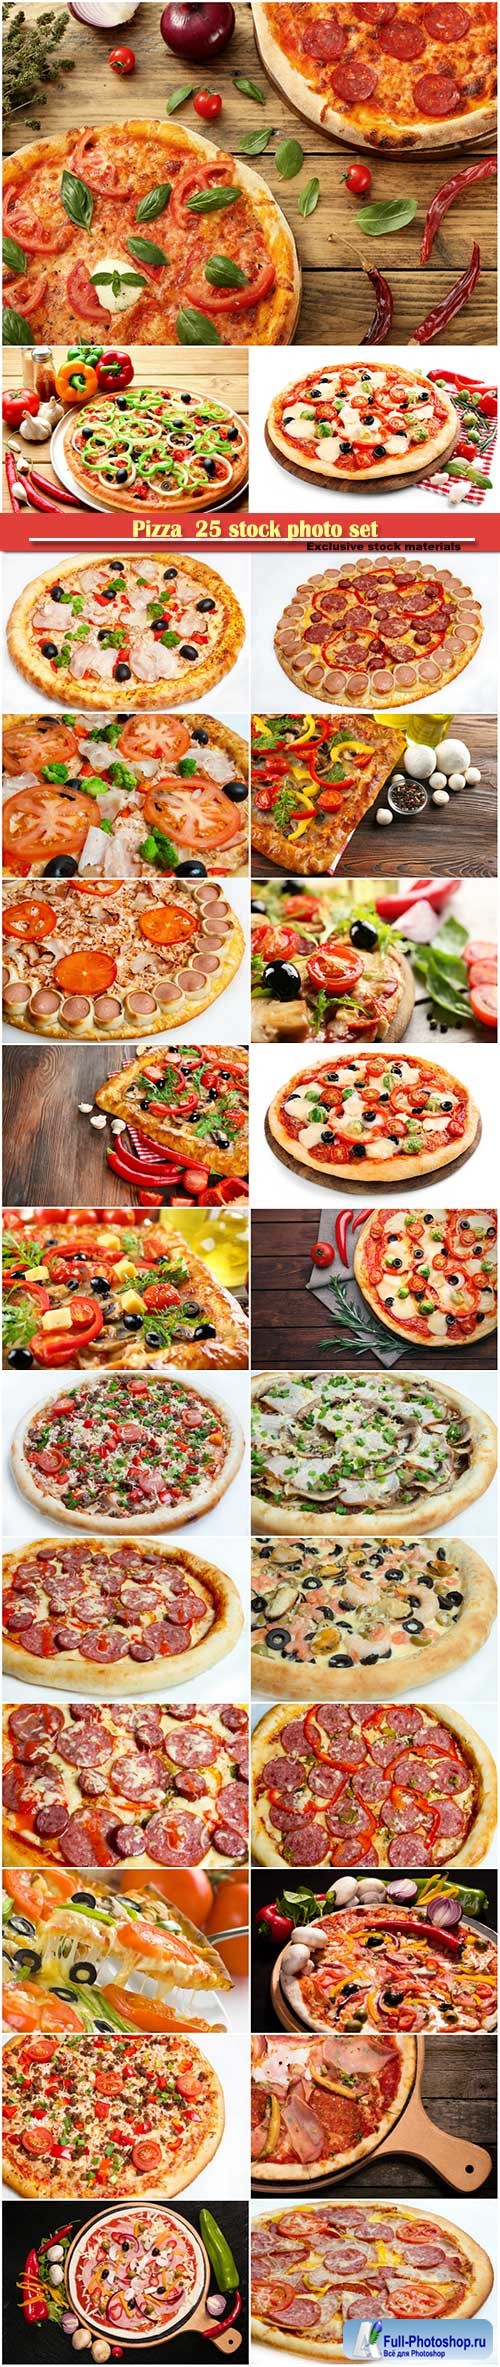 Pizza  25 stock photo set